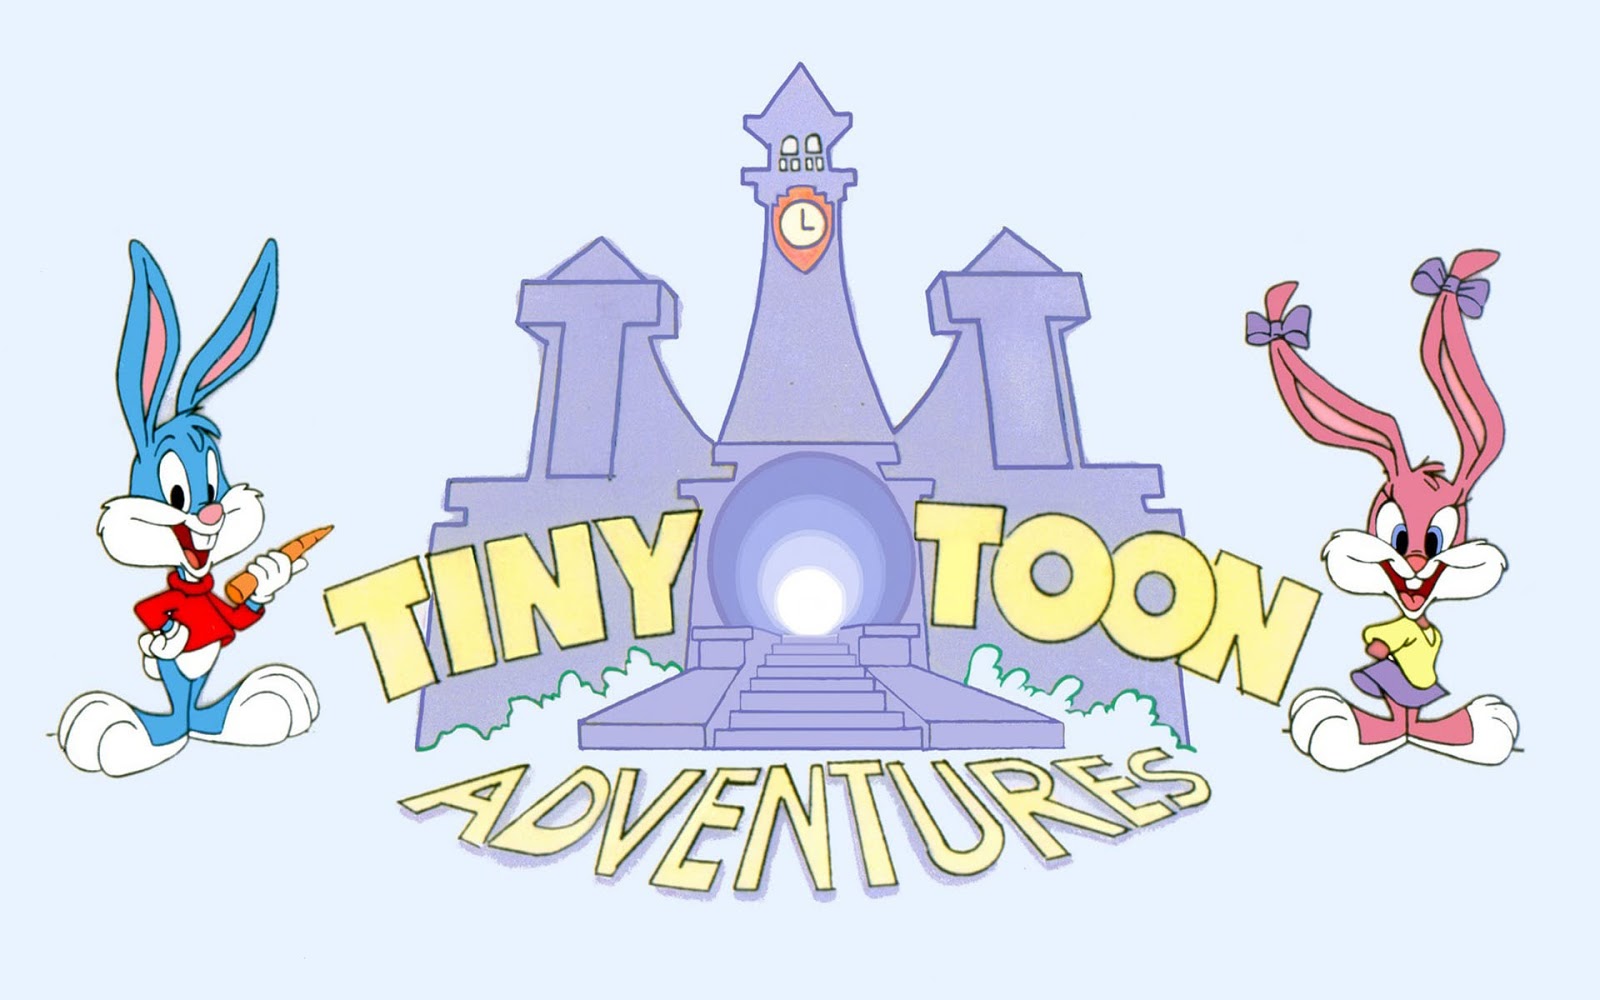 Tiny tunes. Тини тун. Tiny toon Adventures / приключения Тини тун. Тини тун 2. Tiny toon логотип.